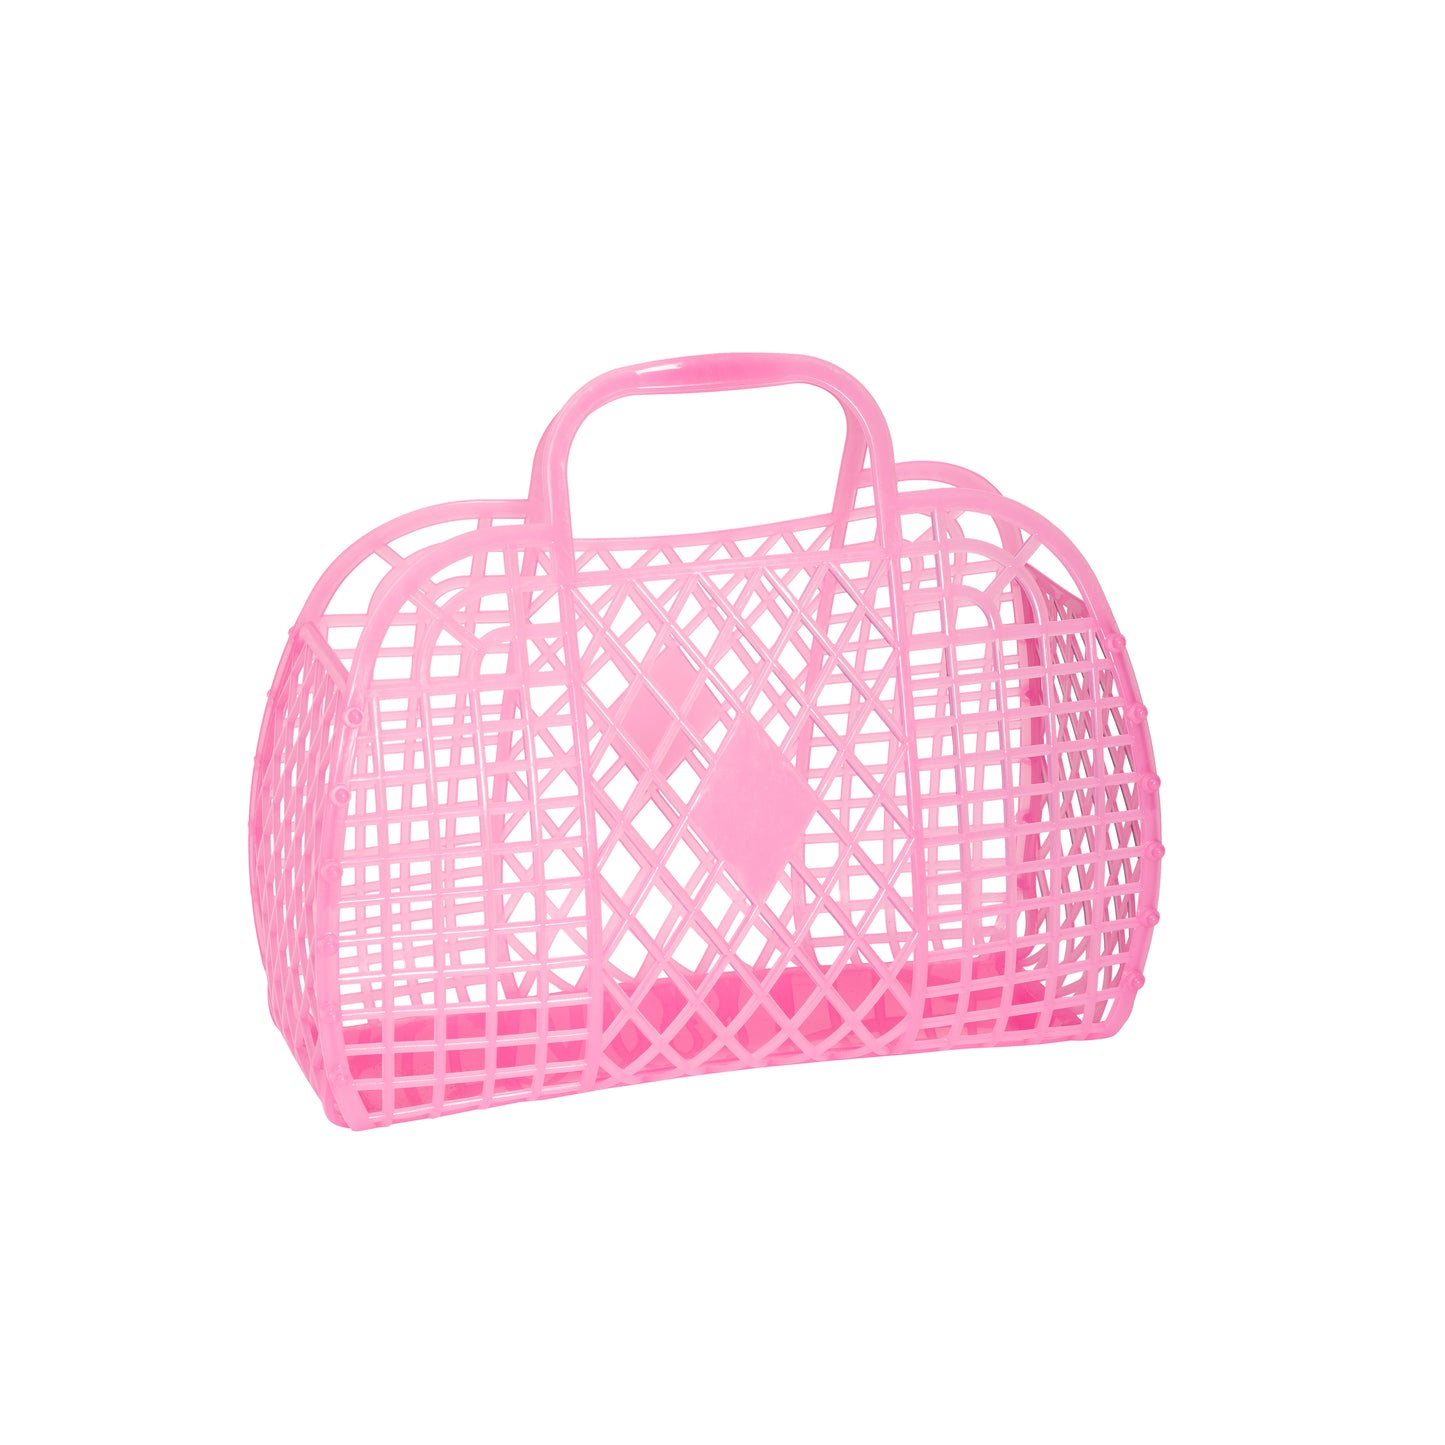 SunJellies Retro Basket Market Bag